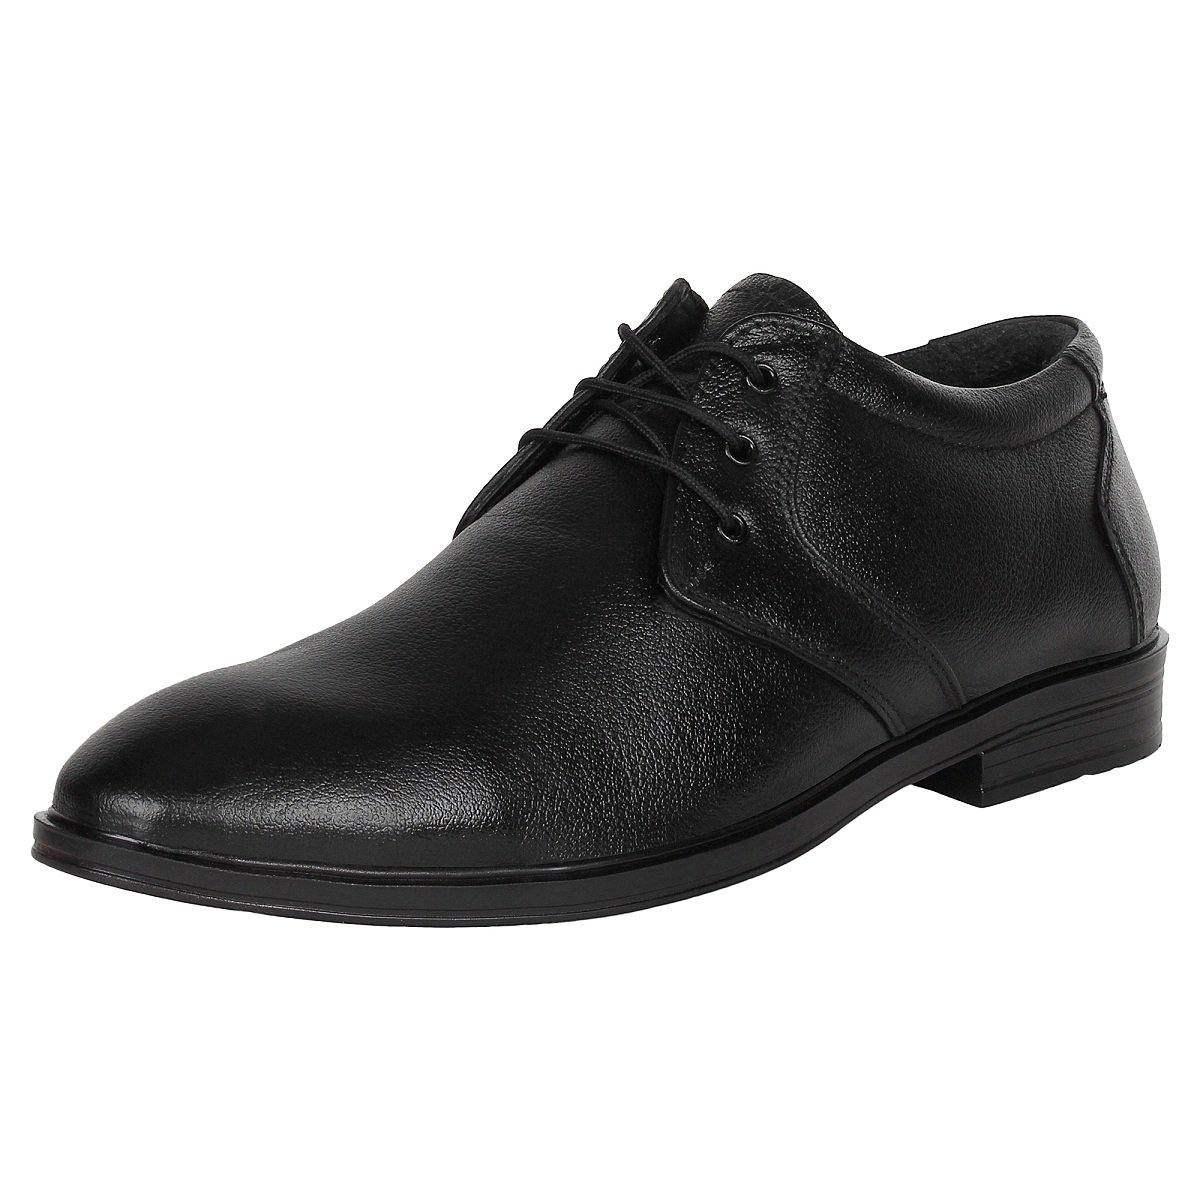 Black Formal Shoes for Men - Minor Defect - SeeandWear